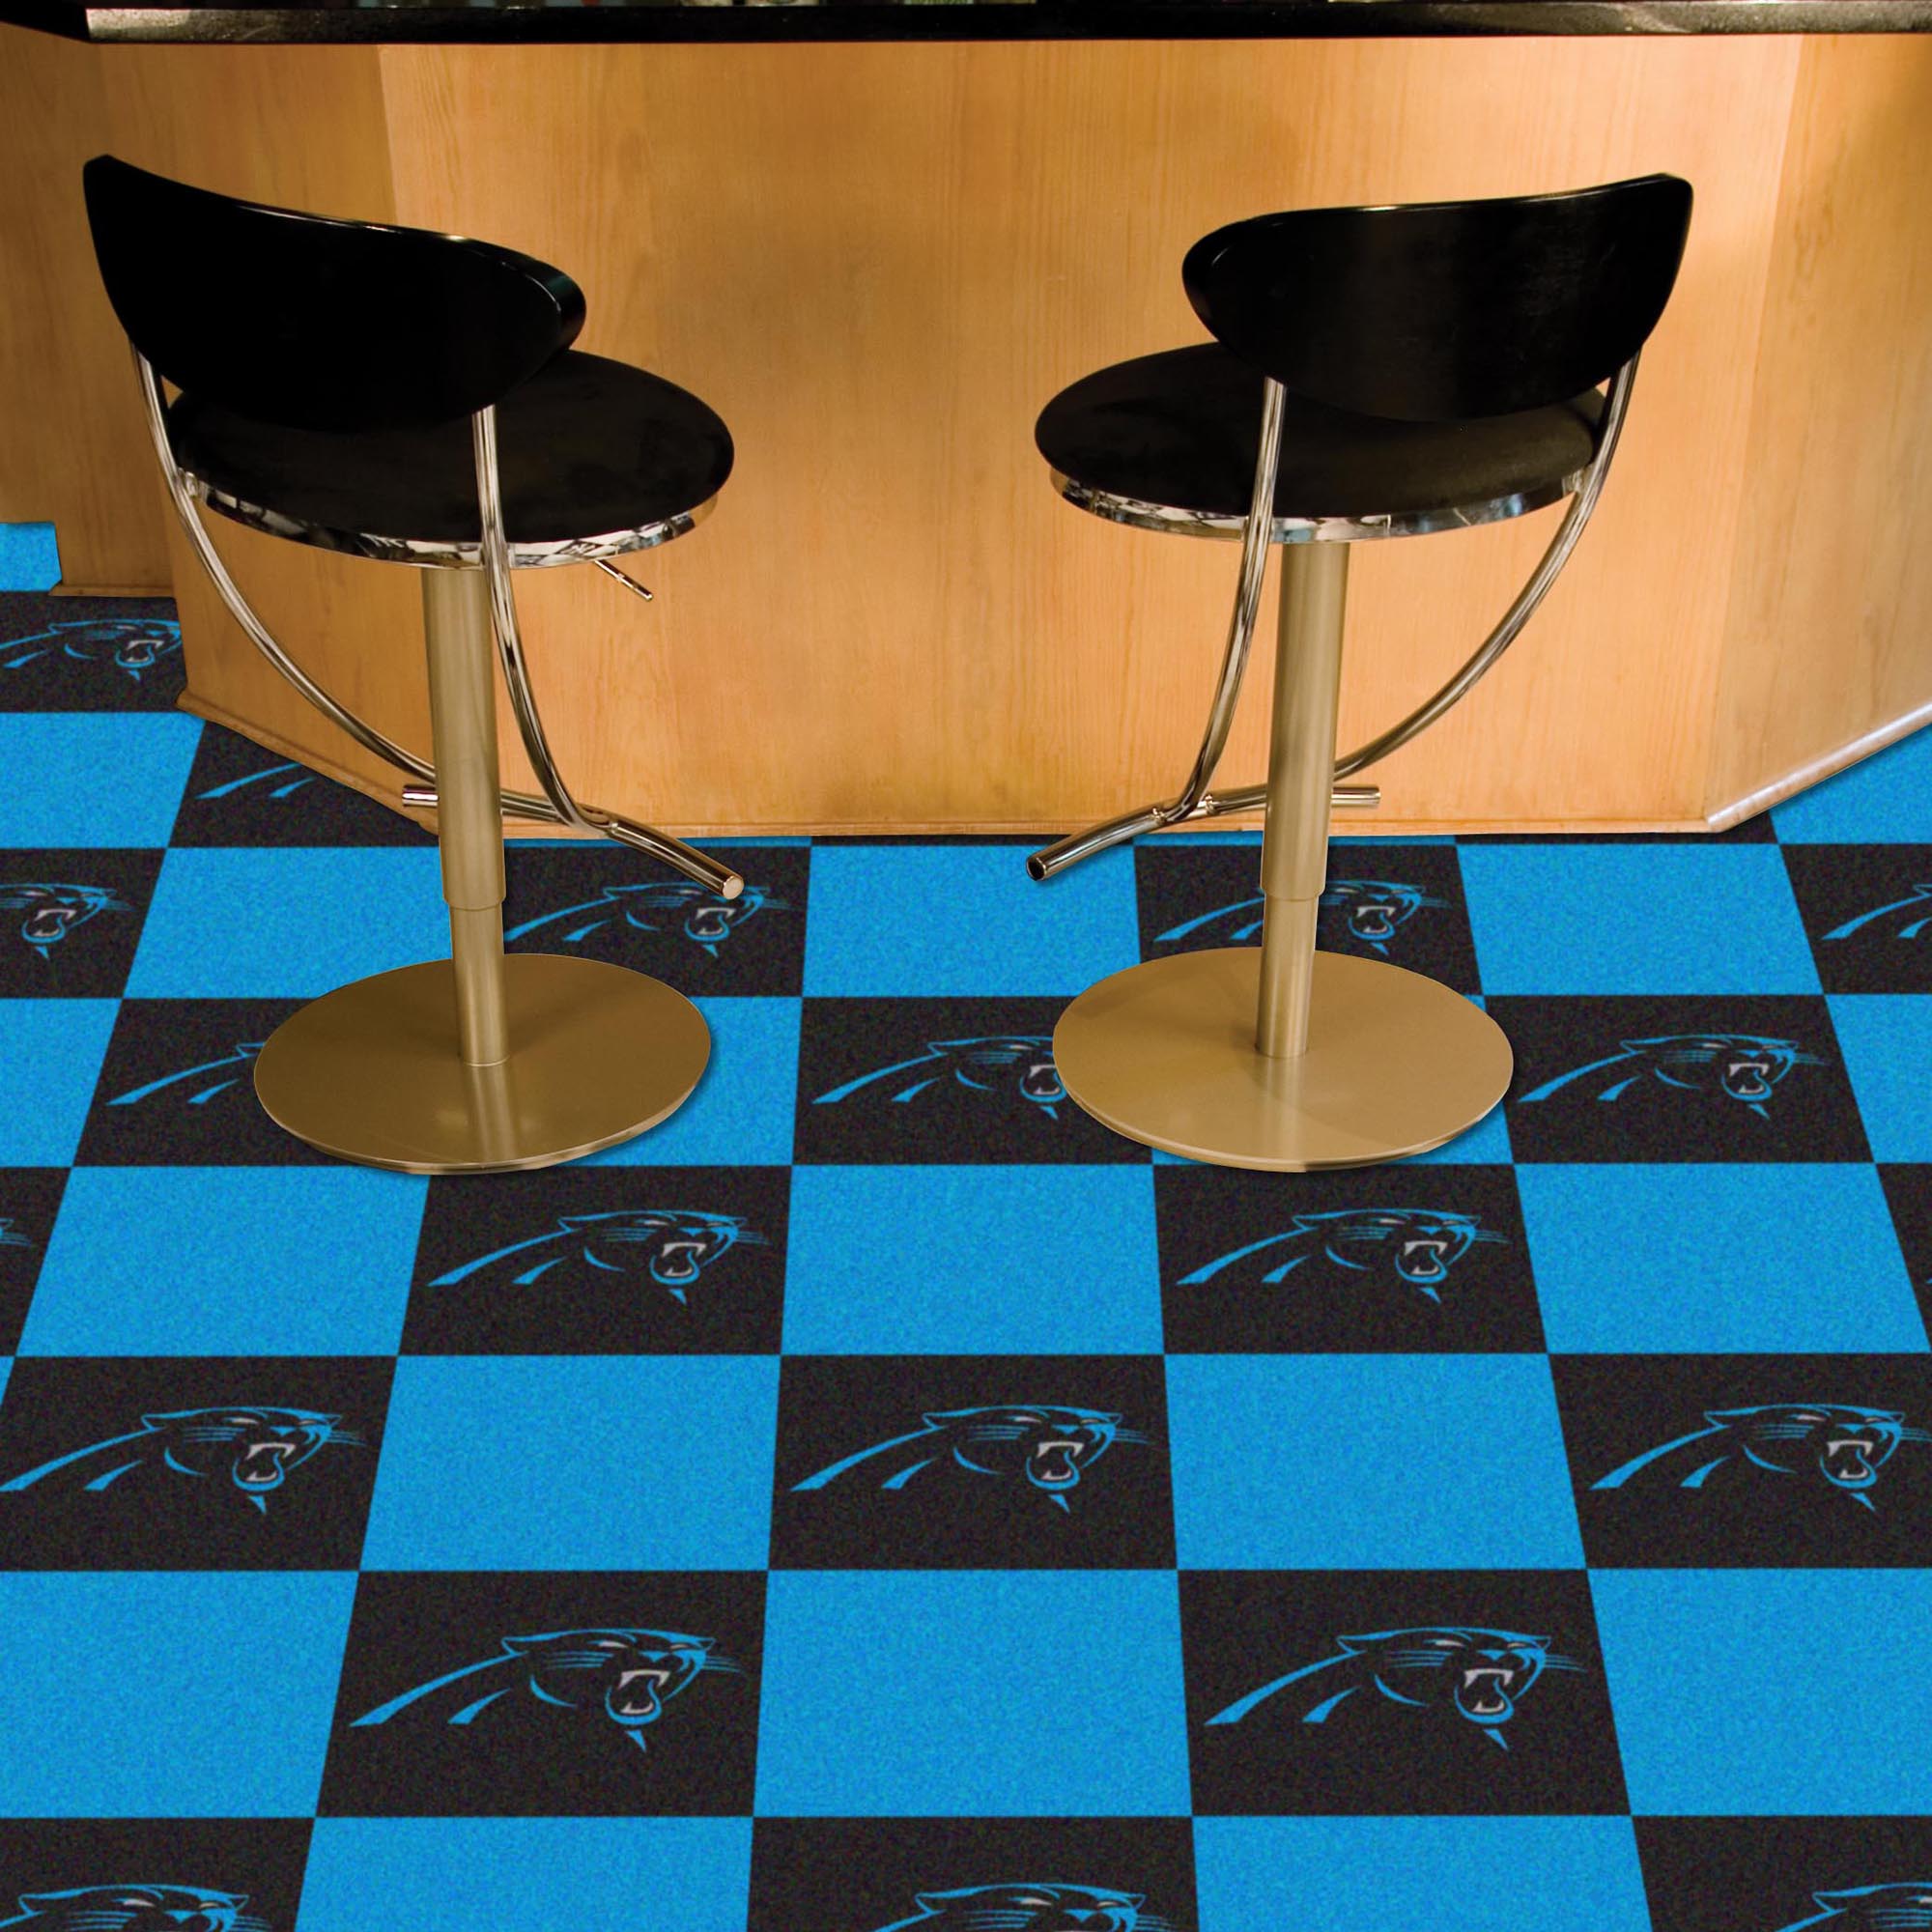 Carolina Panthers Carpet Tiles 18x18 in.